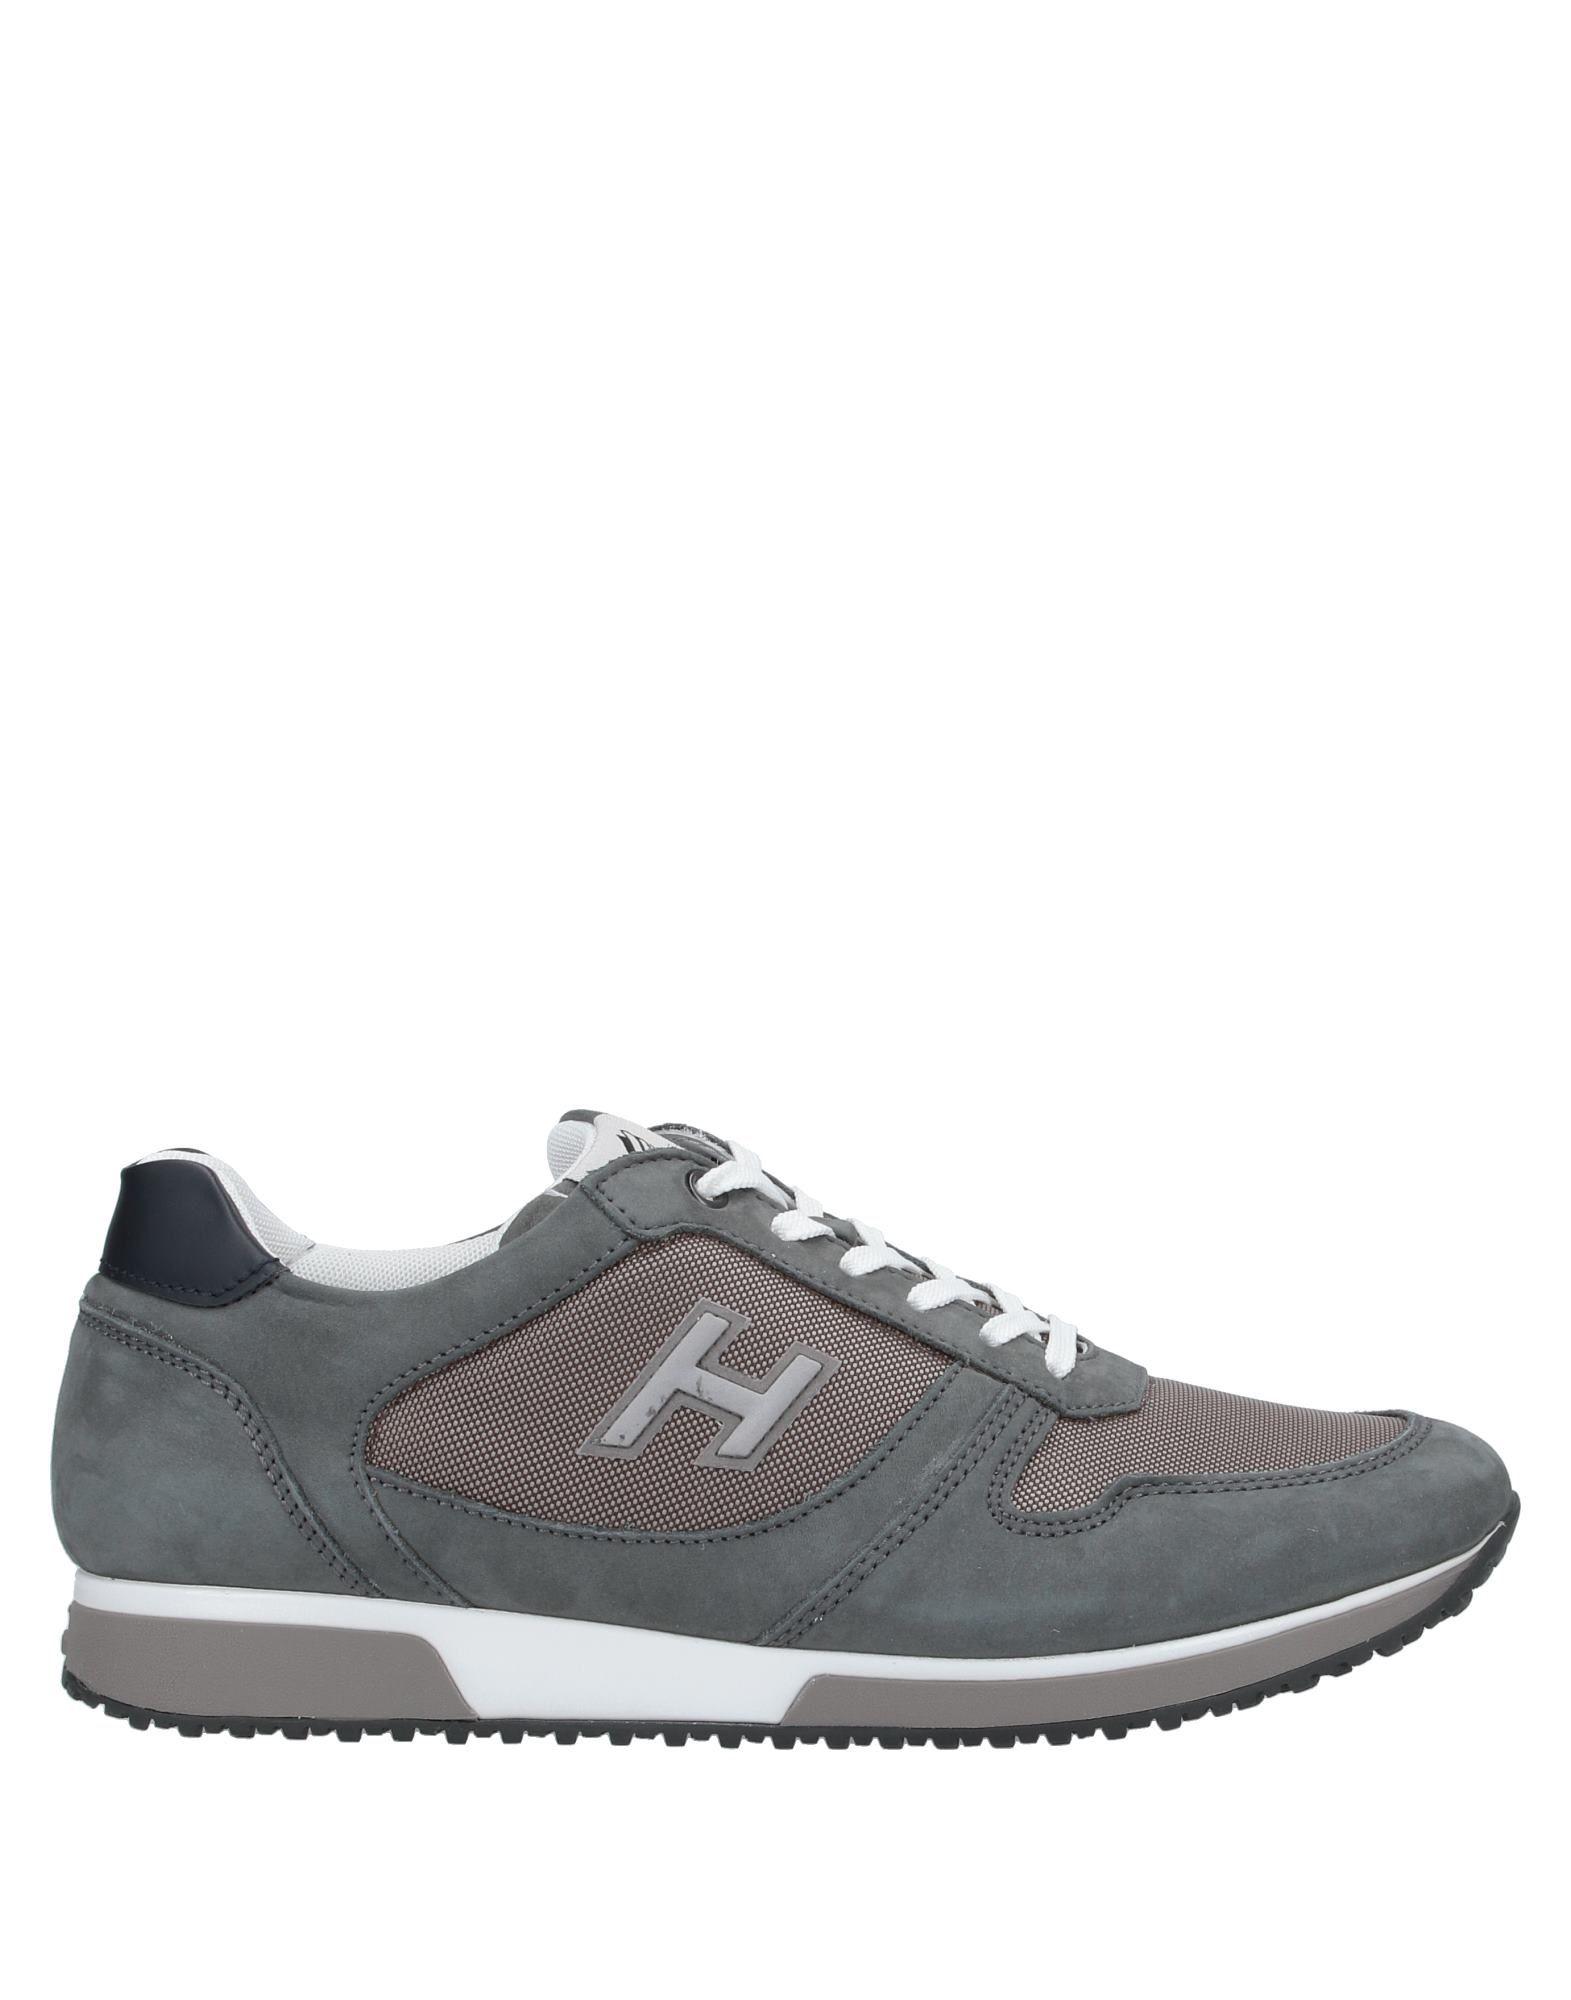 Hogan Low-tops & Sneakers in Grey (Gray) for Men - Lyst